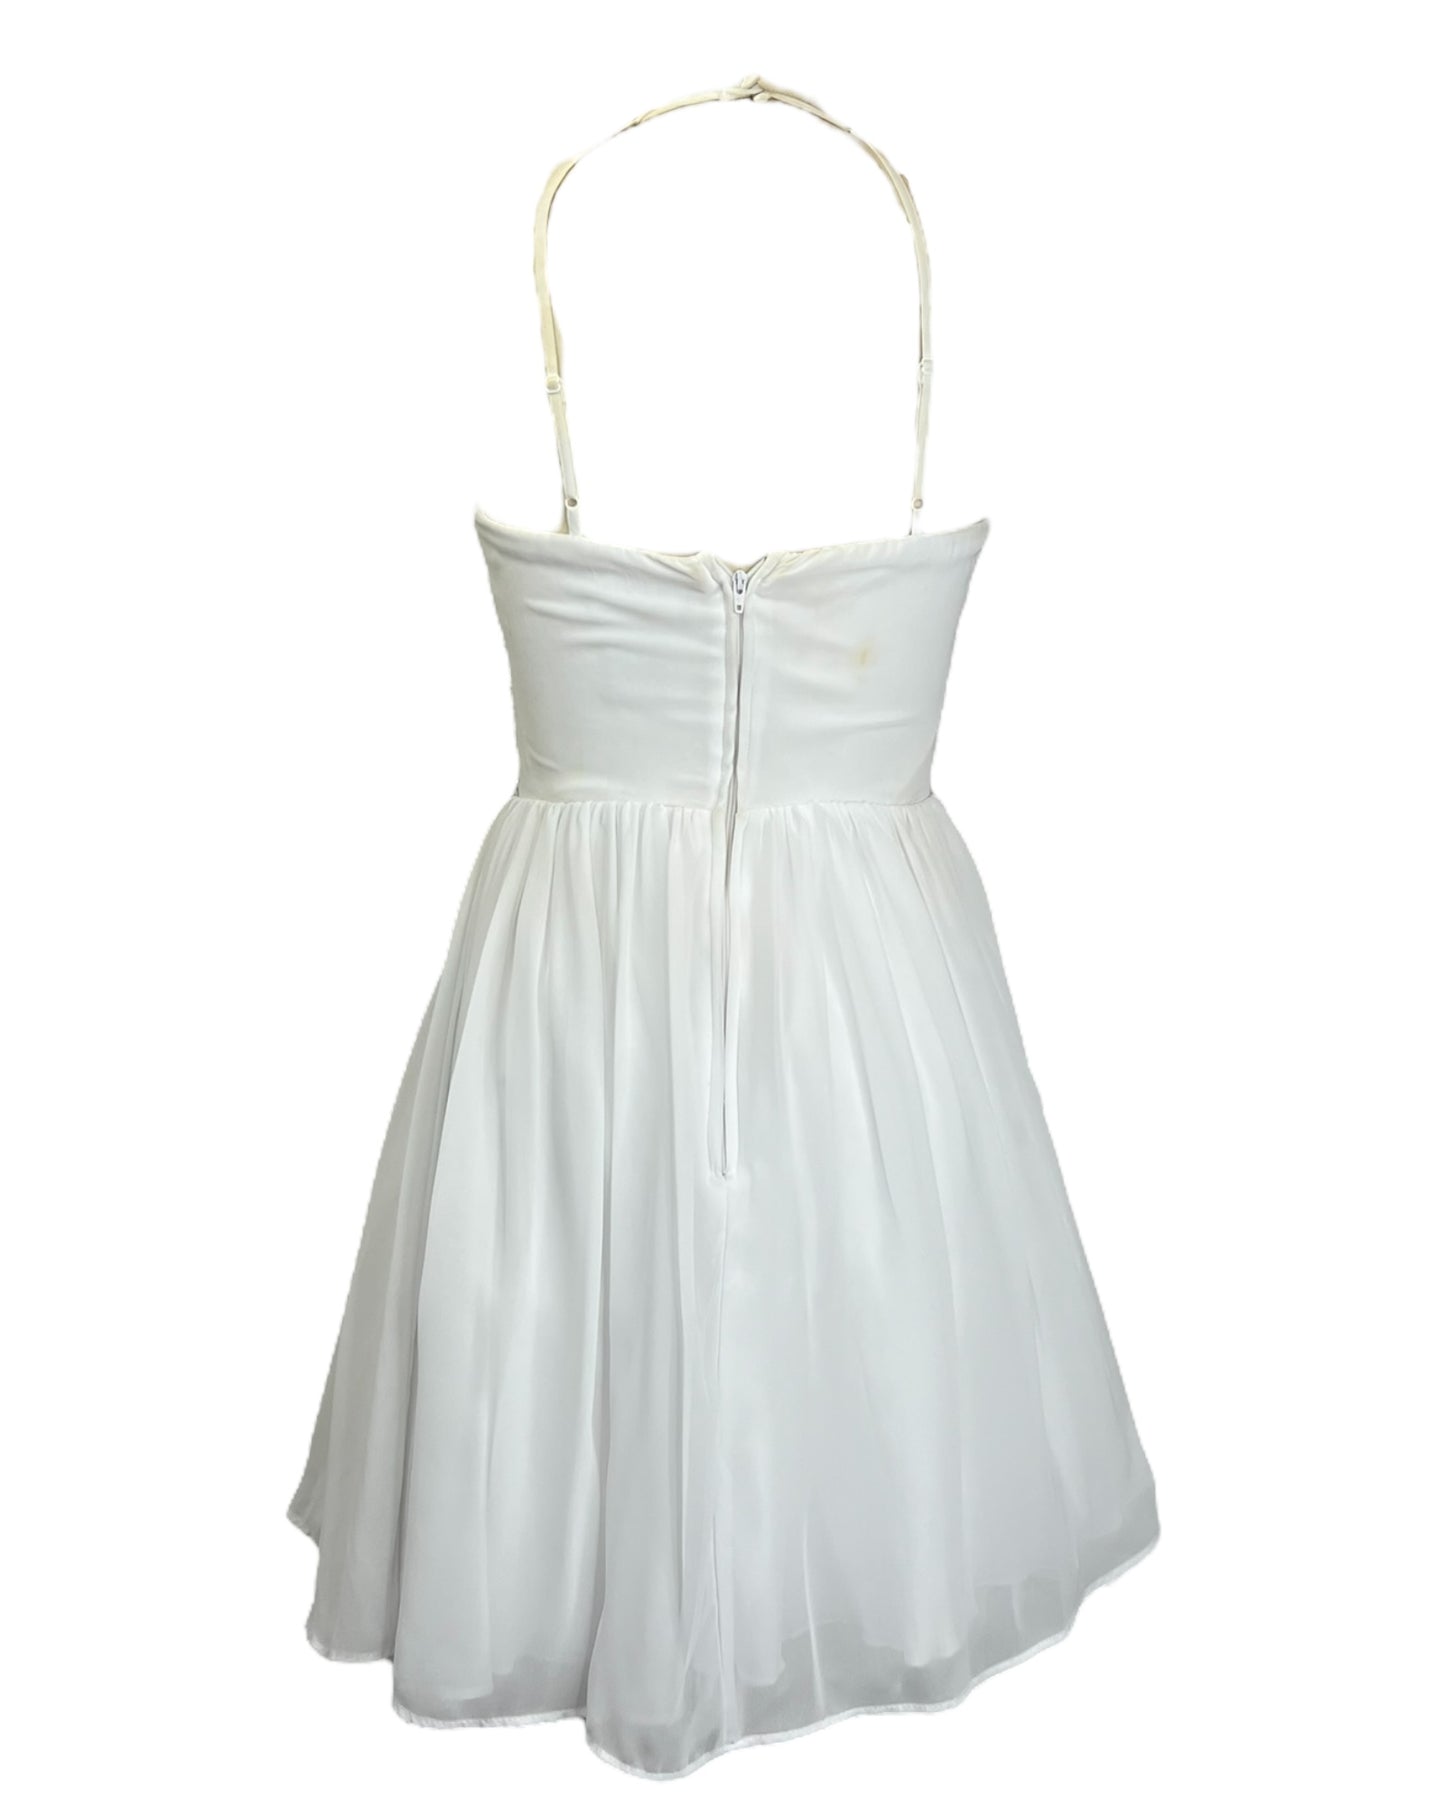 2000s Sparkly White Dress*